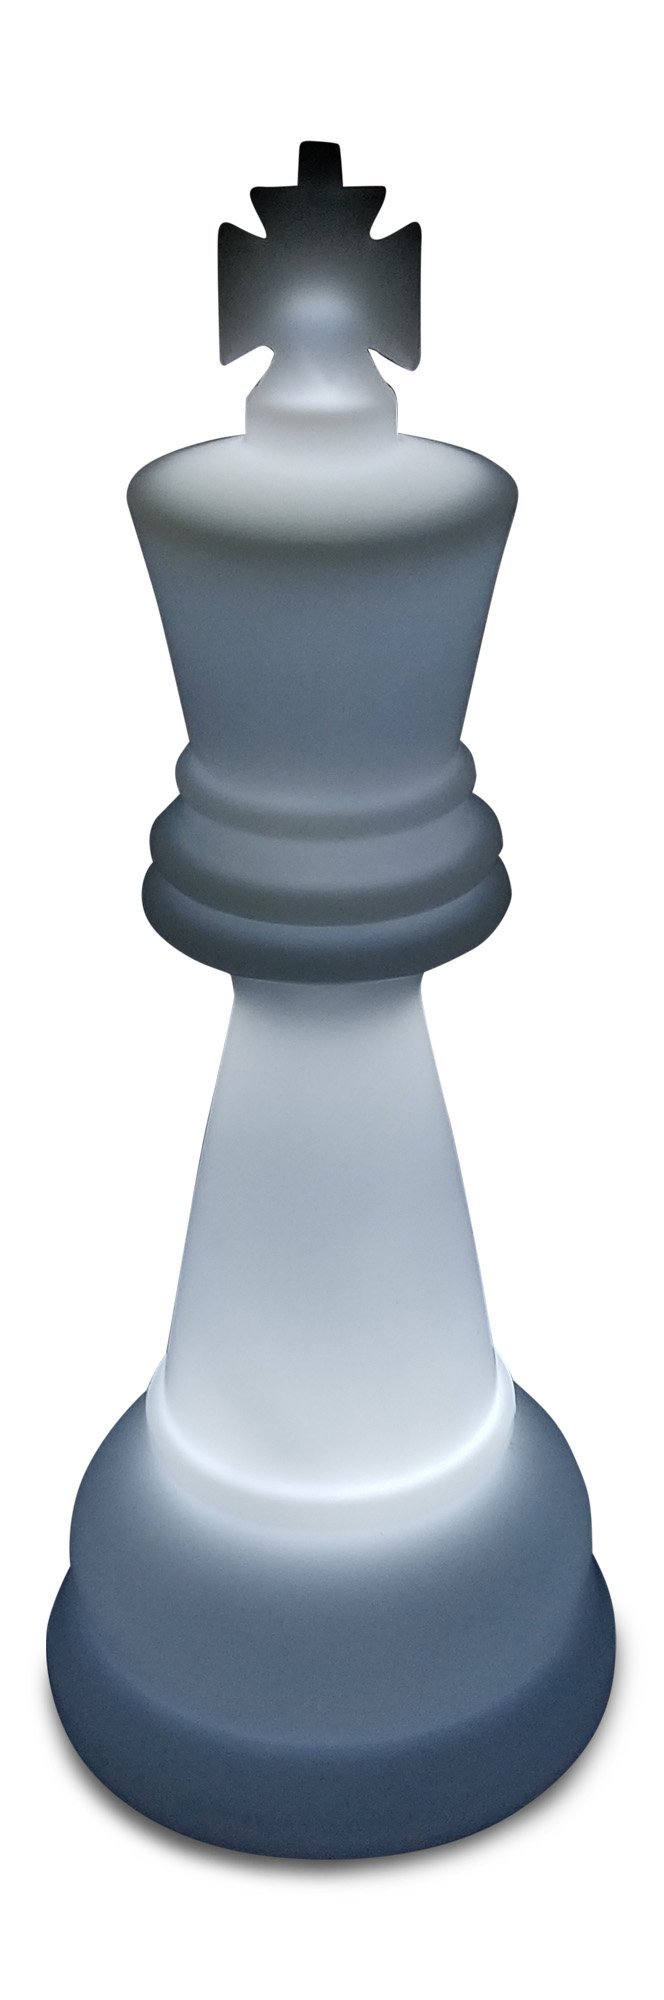 MegaChess 38 Inch Premium Plastic King Light-Up Giant Chess Piece - White | Default Title | GiantChessUSA